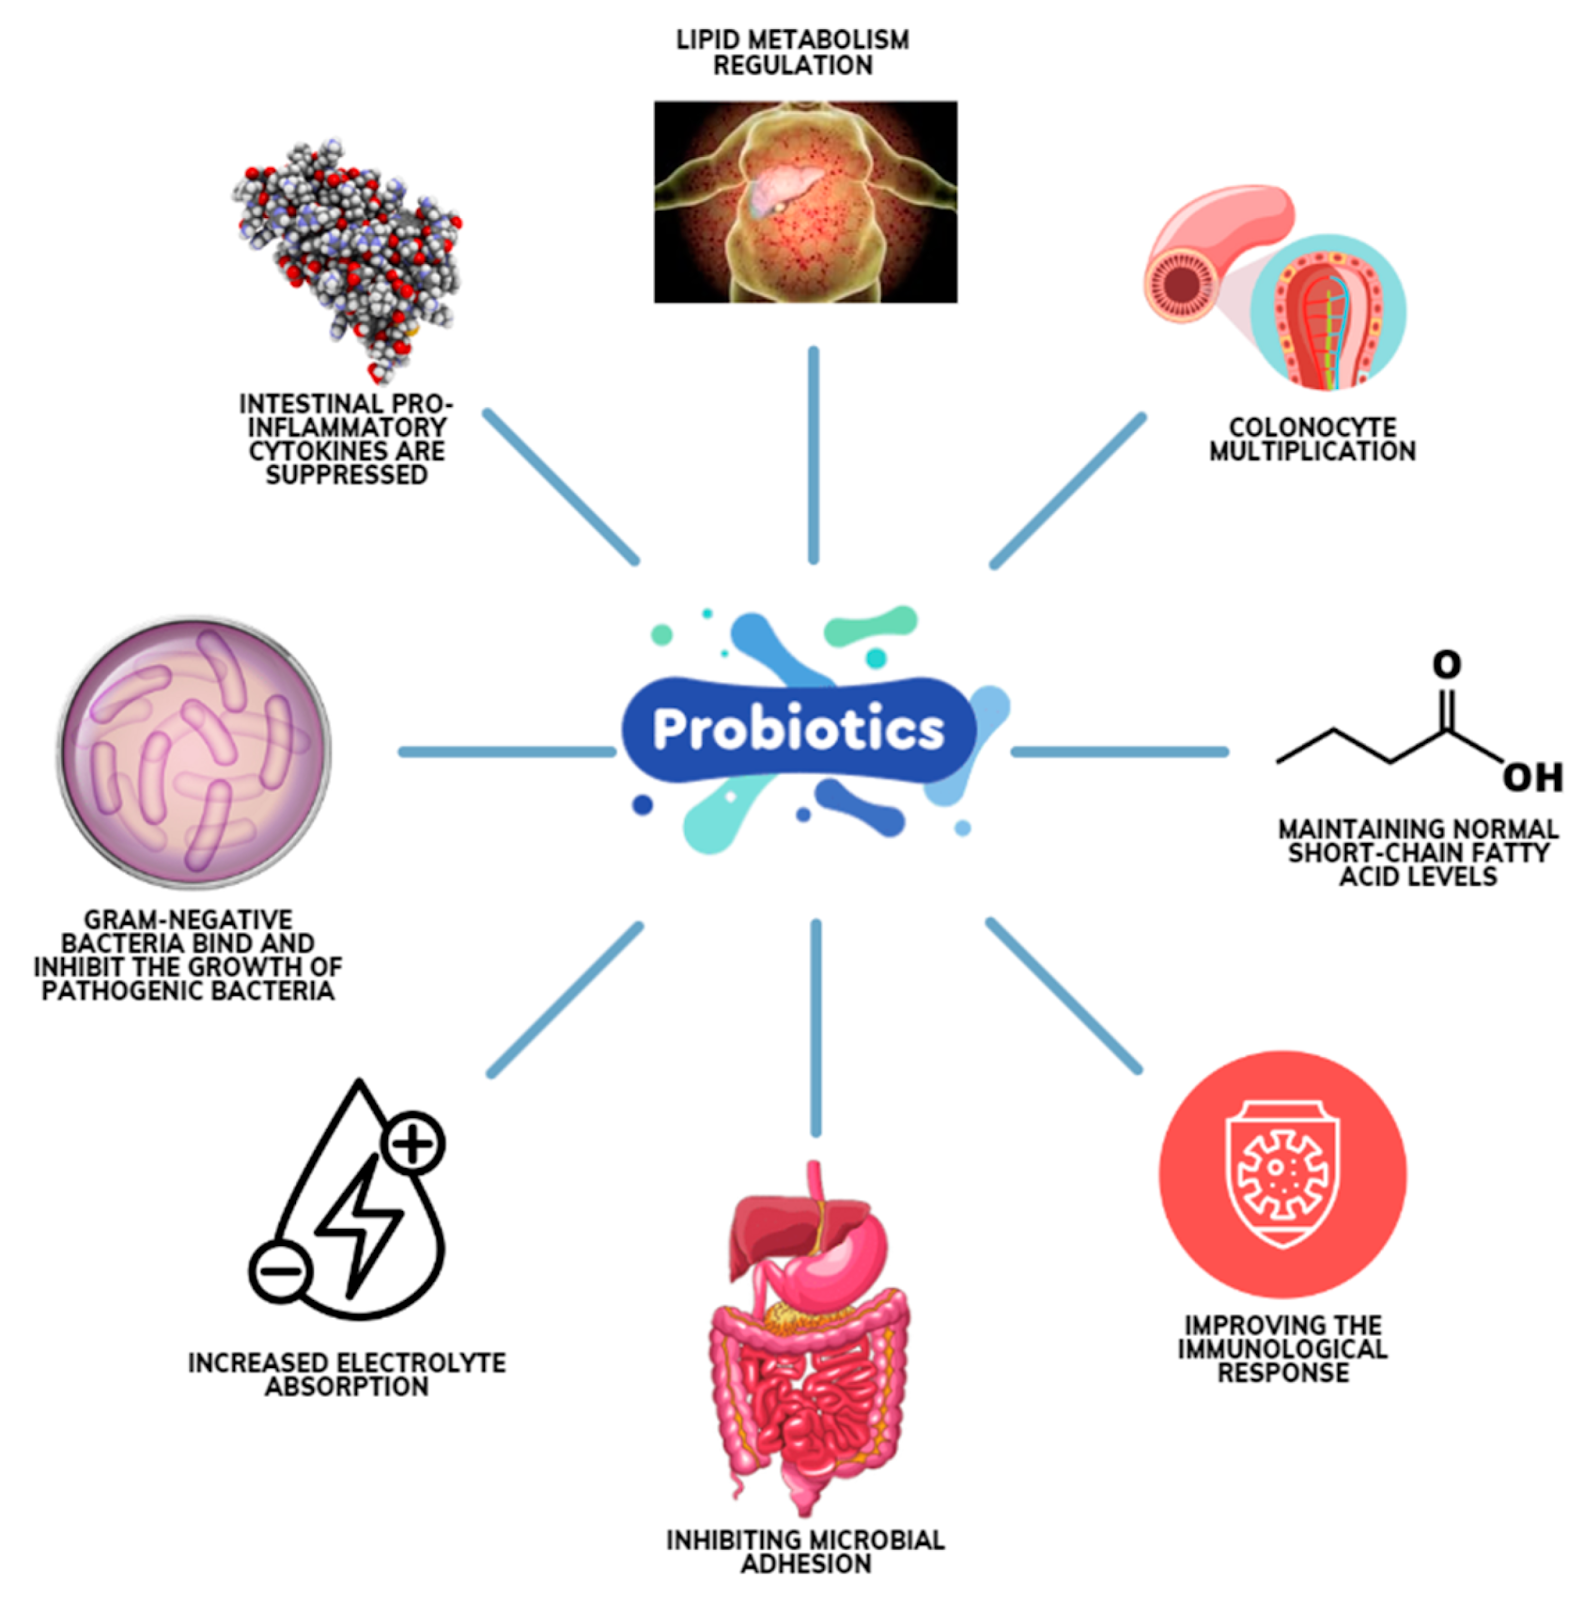 How can probiotics enhance immune function?